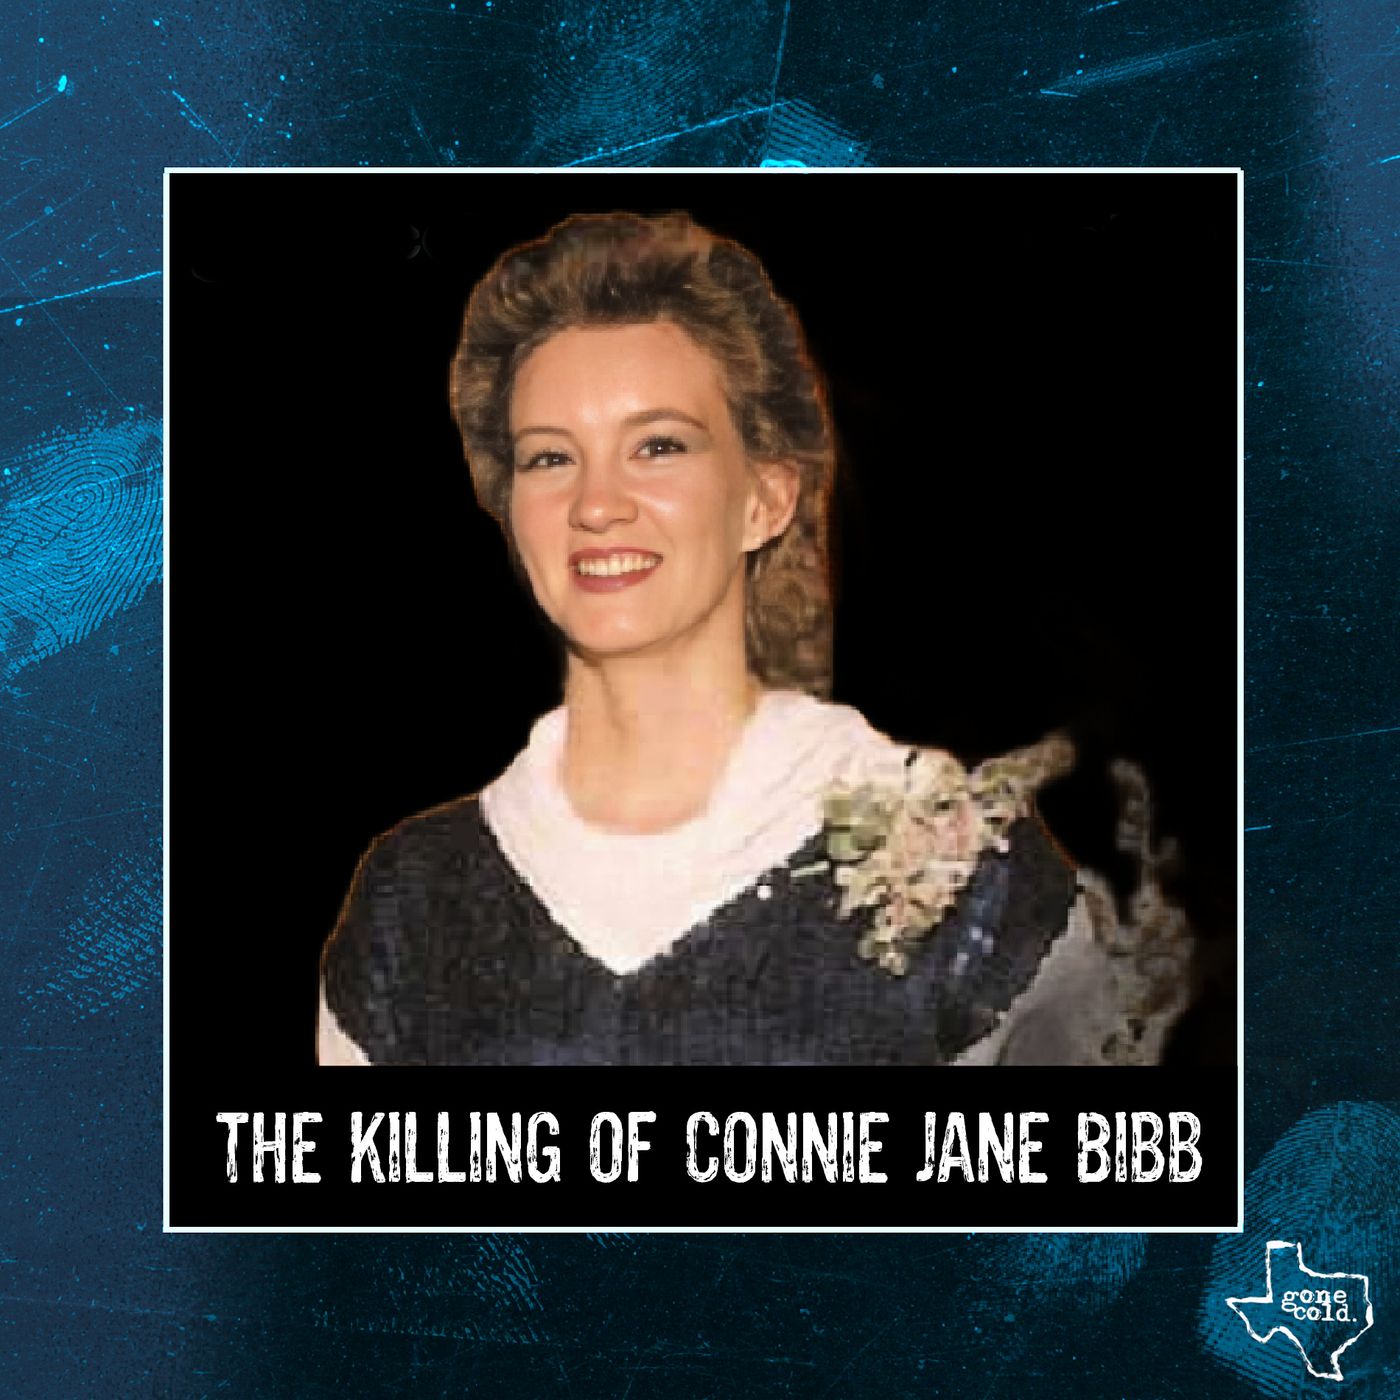 The Killing of Connie Jane Bibb